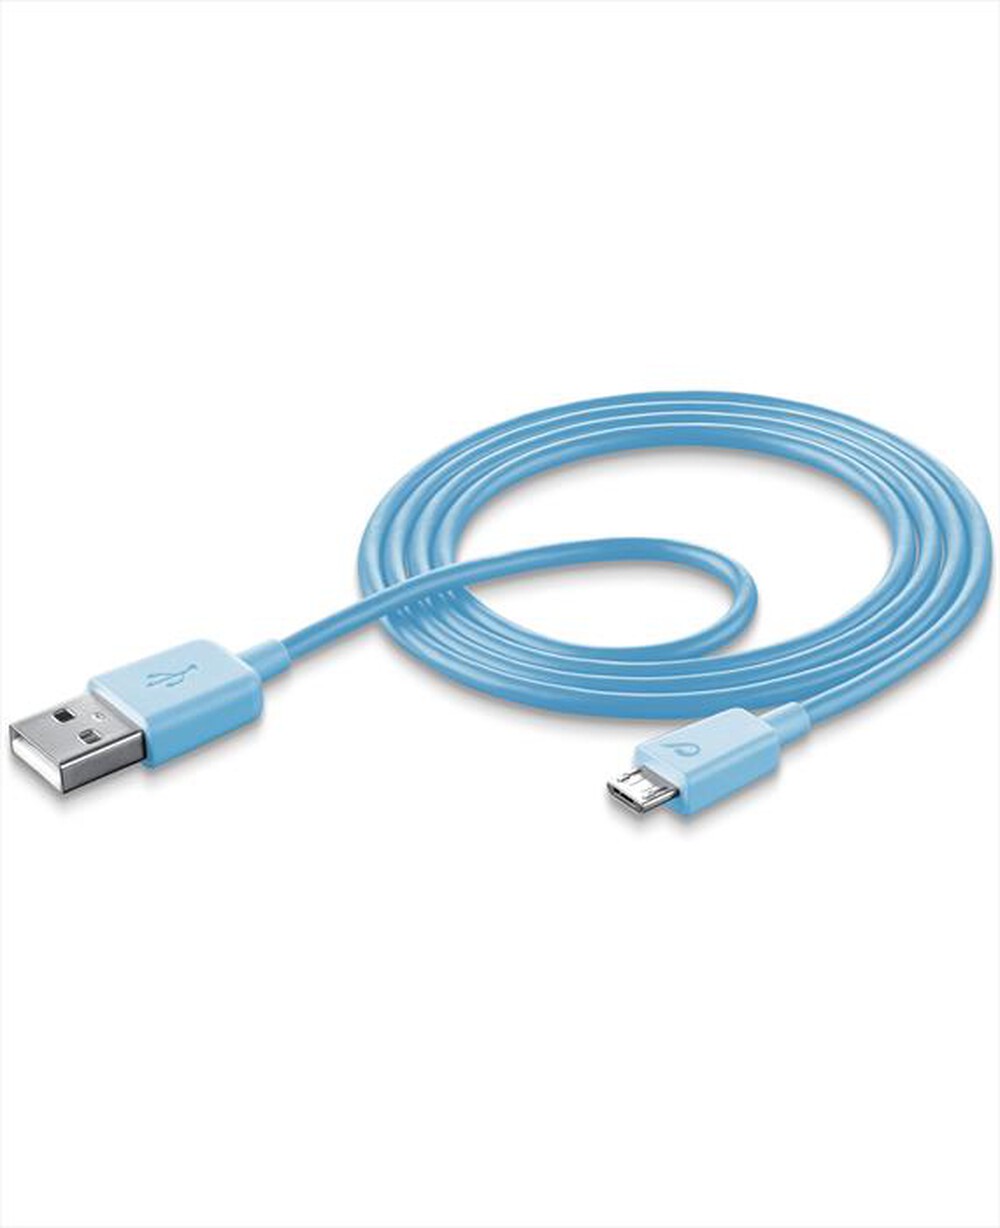 "CELLULARLINE - USB Data Cable - Micro USB - Blu"